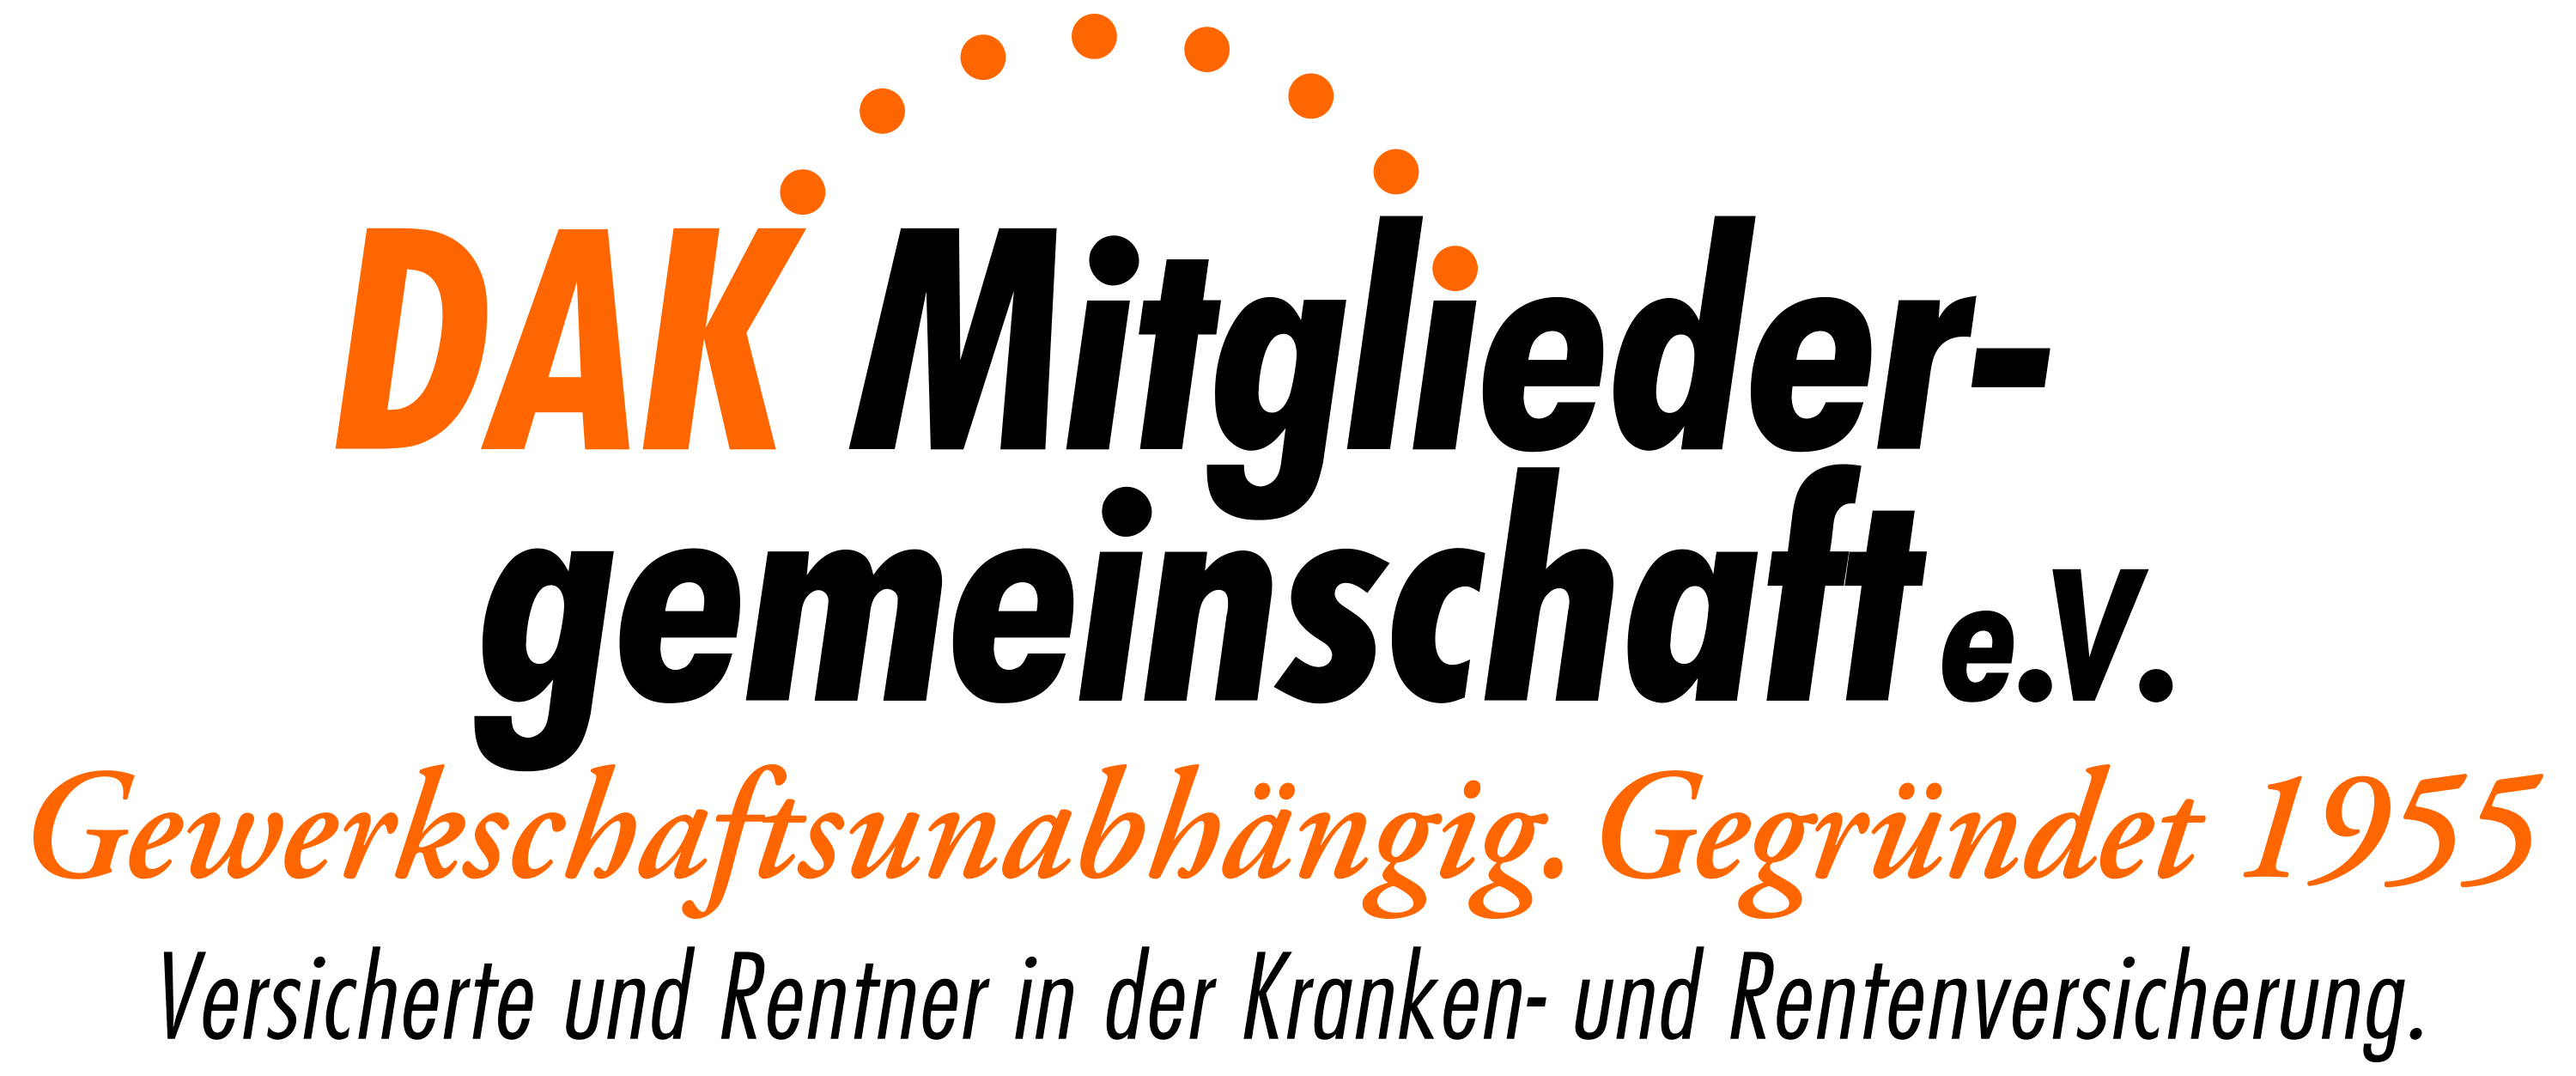 dak-mg-logo-auf-weiss-rgb-3000-x-1253-pixel-transparent-orange